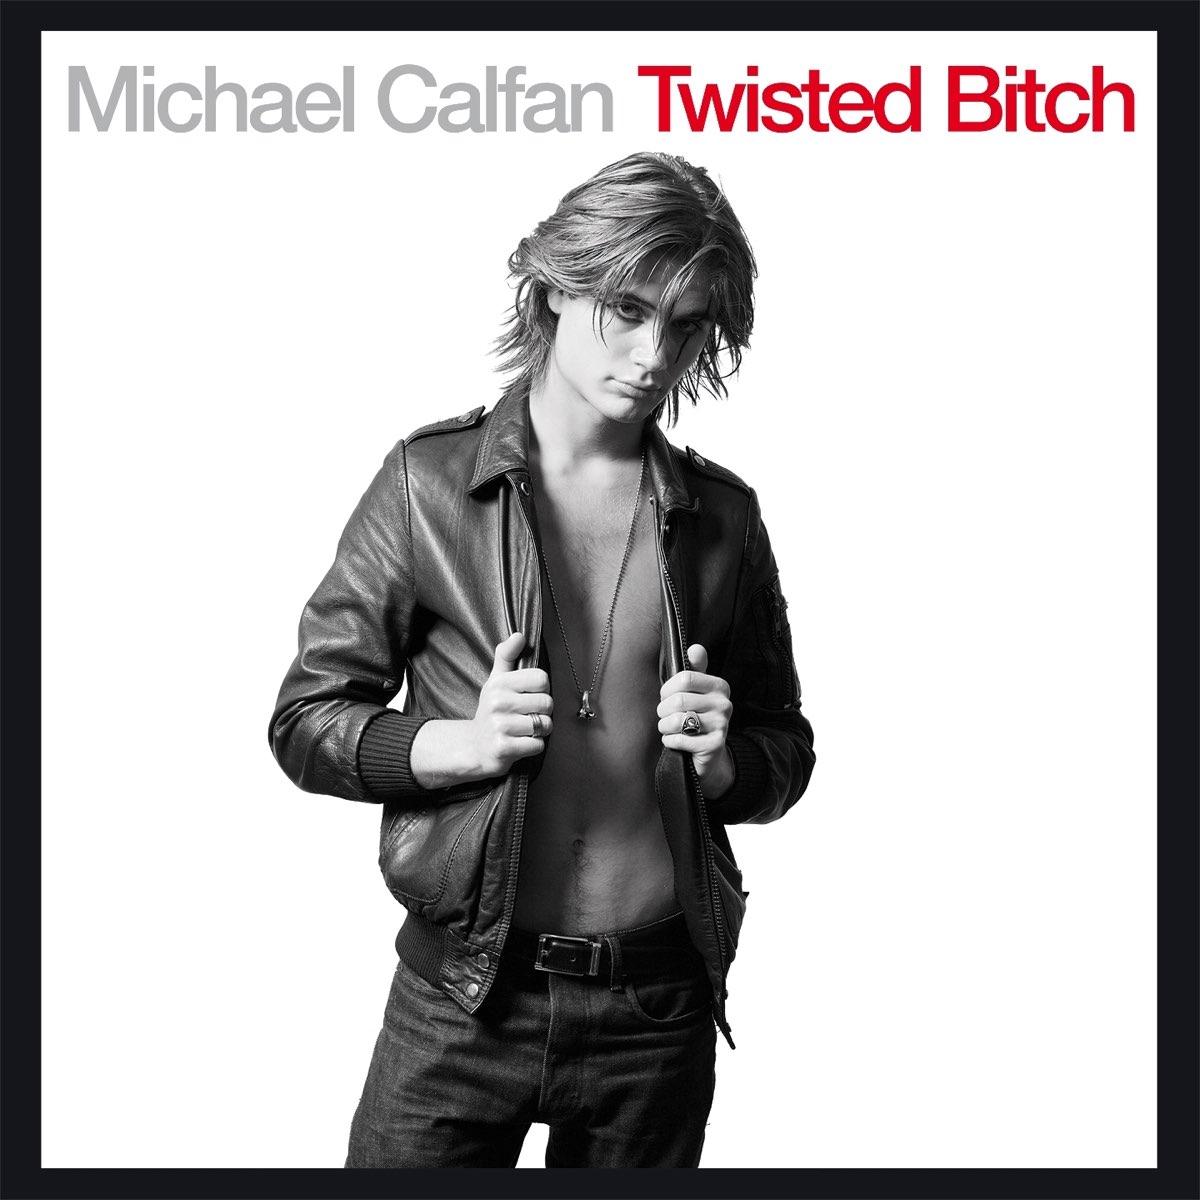 Twisted Bitch - Single by Michael Calfan.